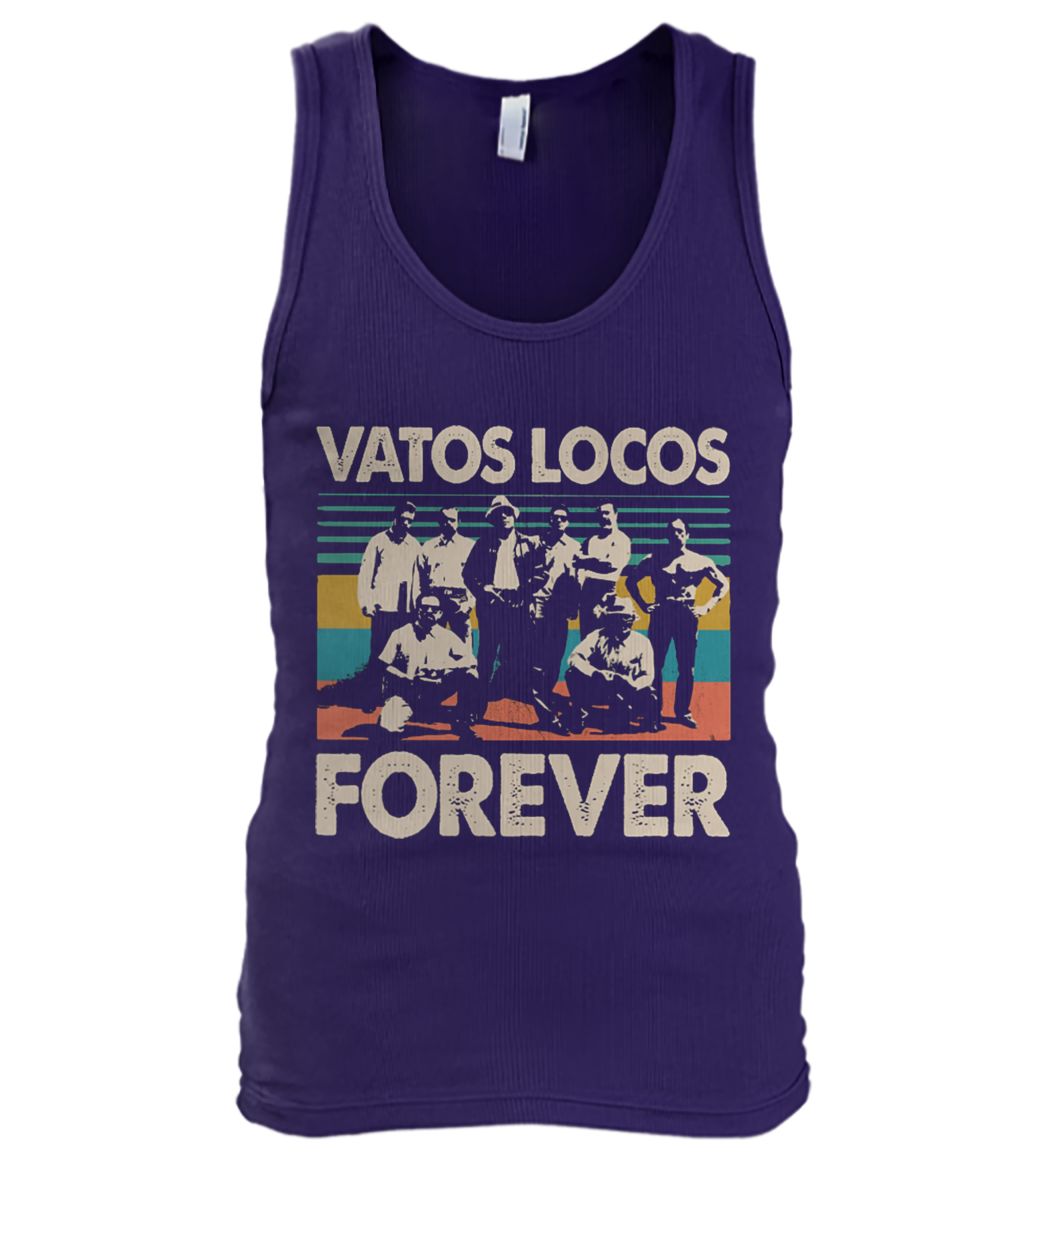 Vintage vatos locos forever men's tank top